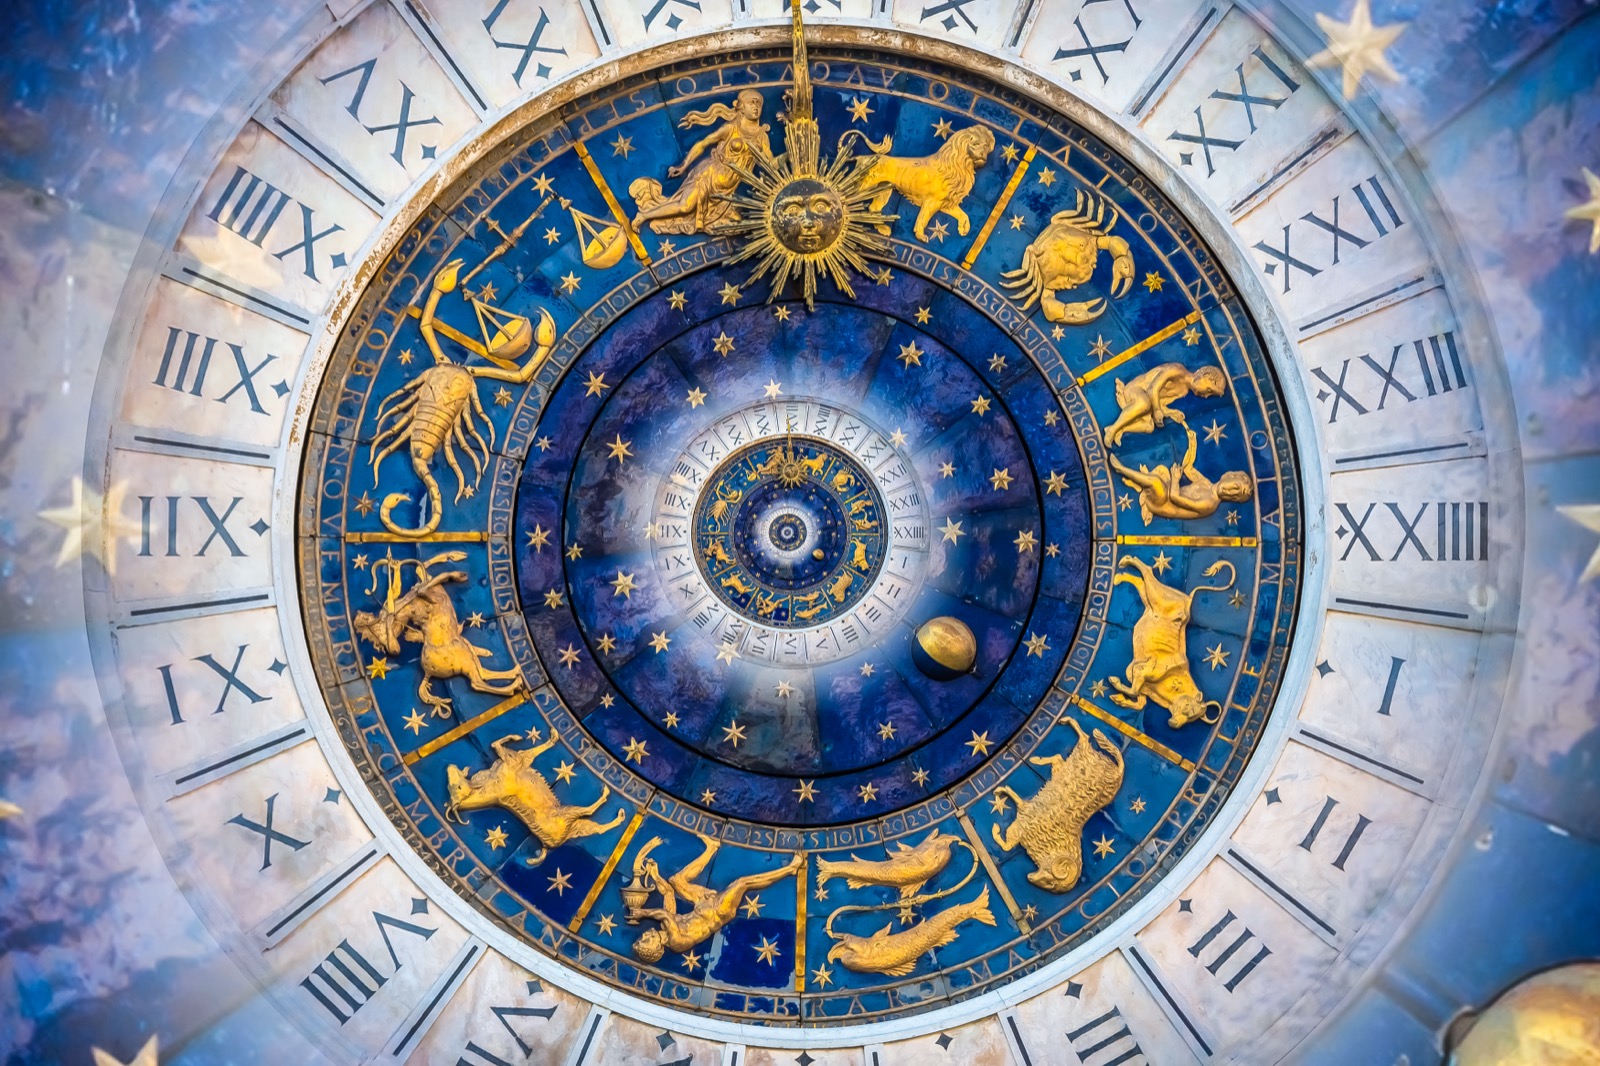 Astrologer Astrology zodiac signs horoscope Roman numerals